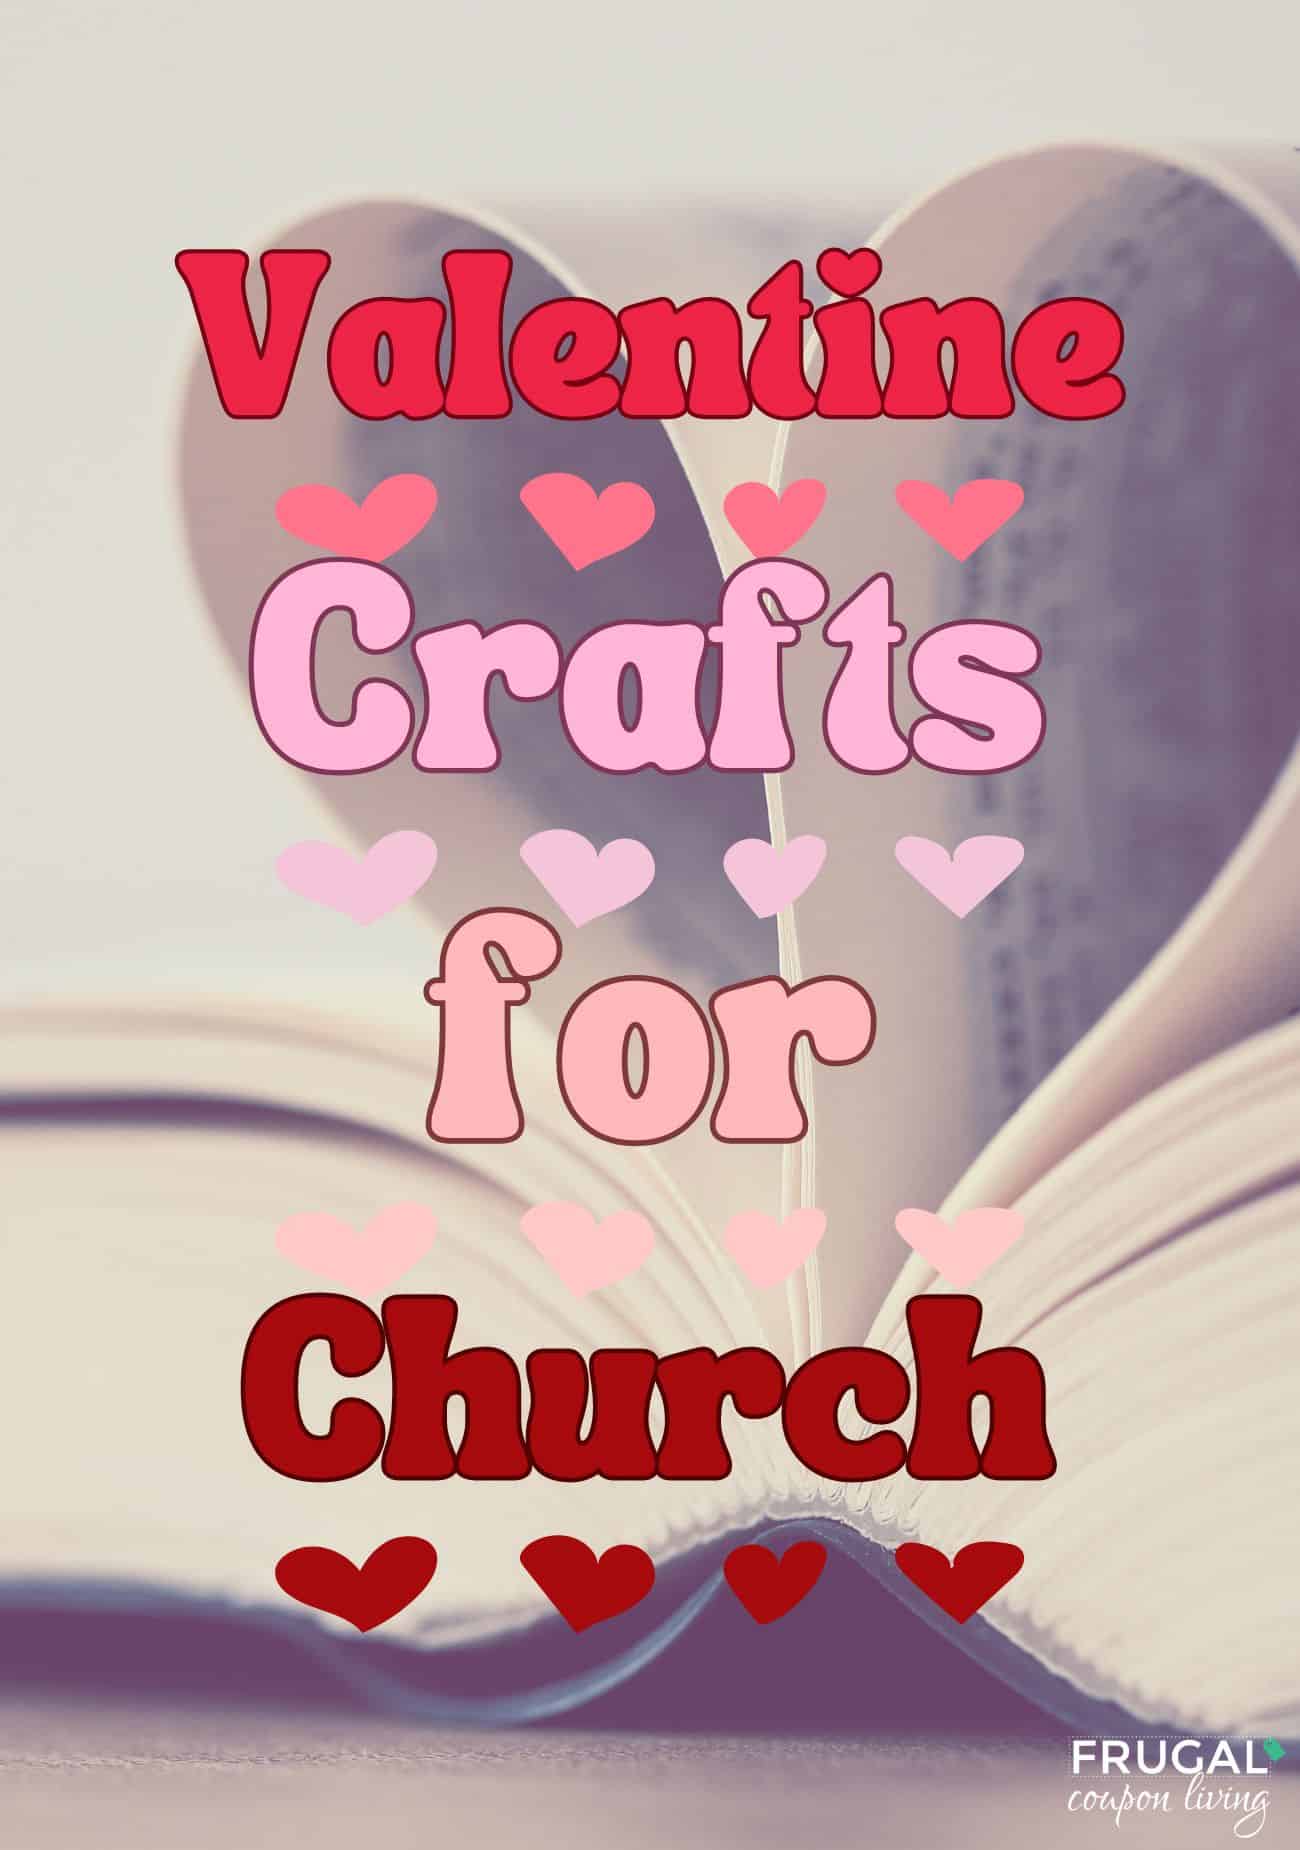 valentines day activities for children's church